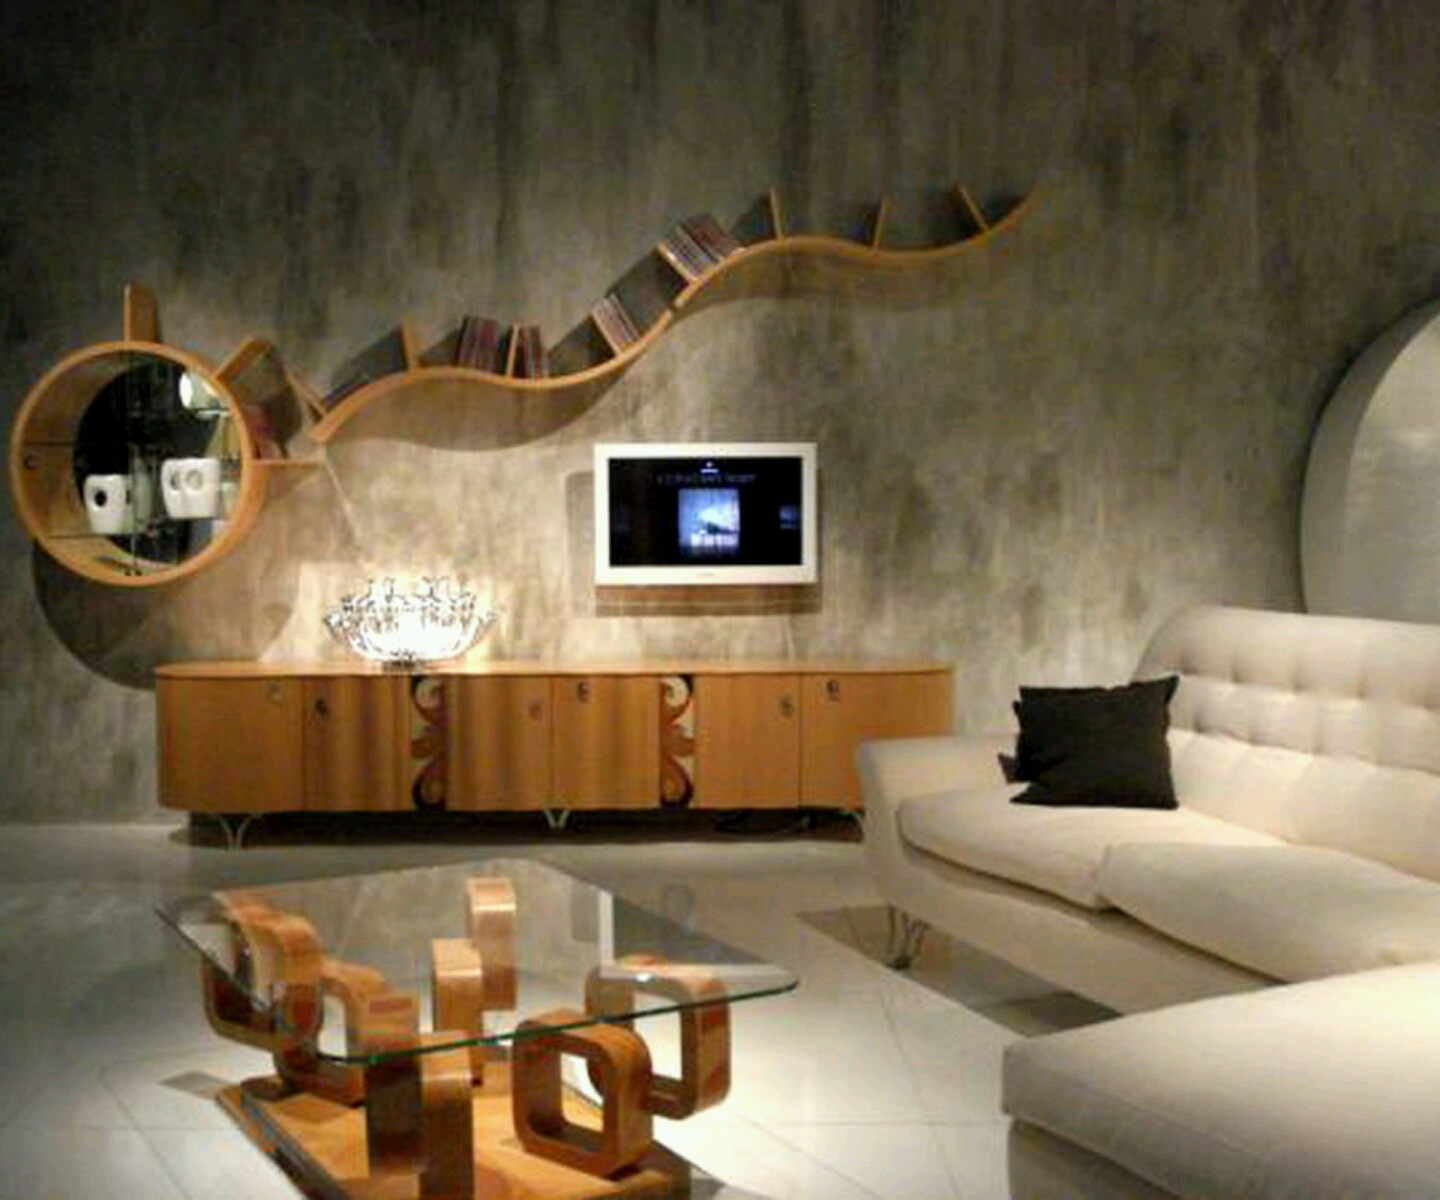 New home designs latest.: Modern living room designs ideas.